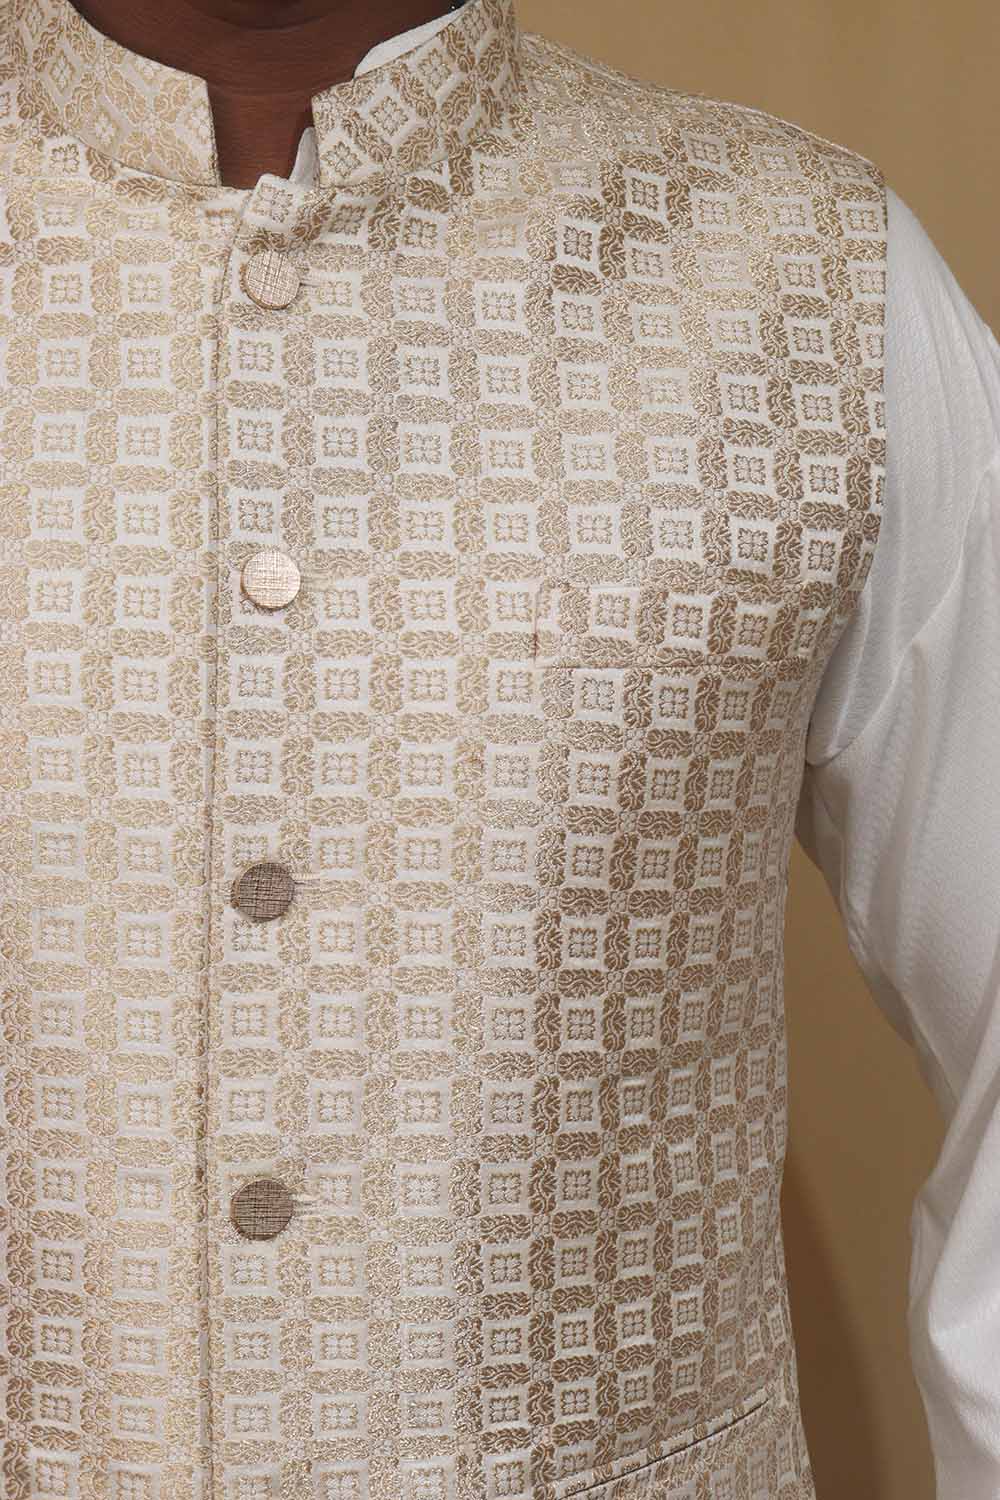 Stunning Off White Banarasi Silk Jacket: Luxurious Style and Versatility - Luxurion World